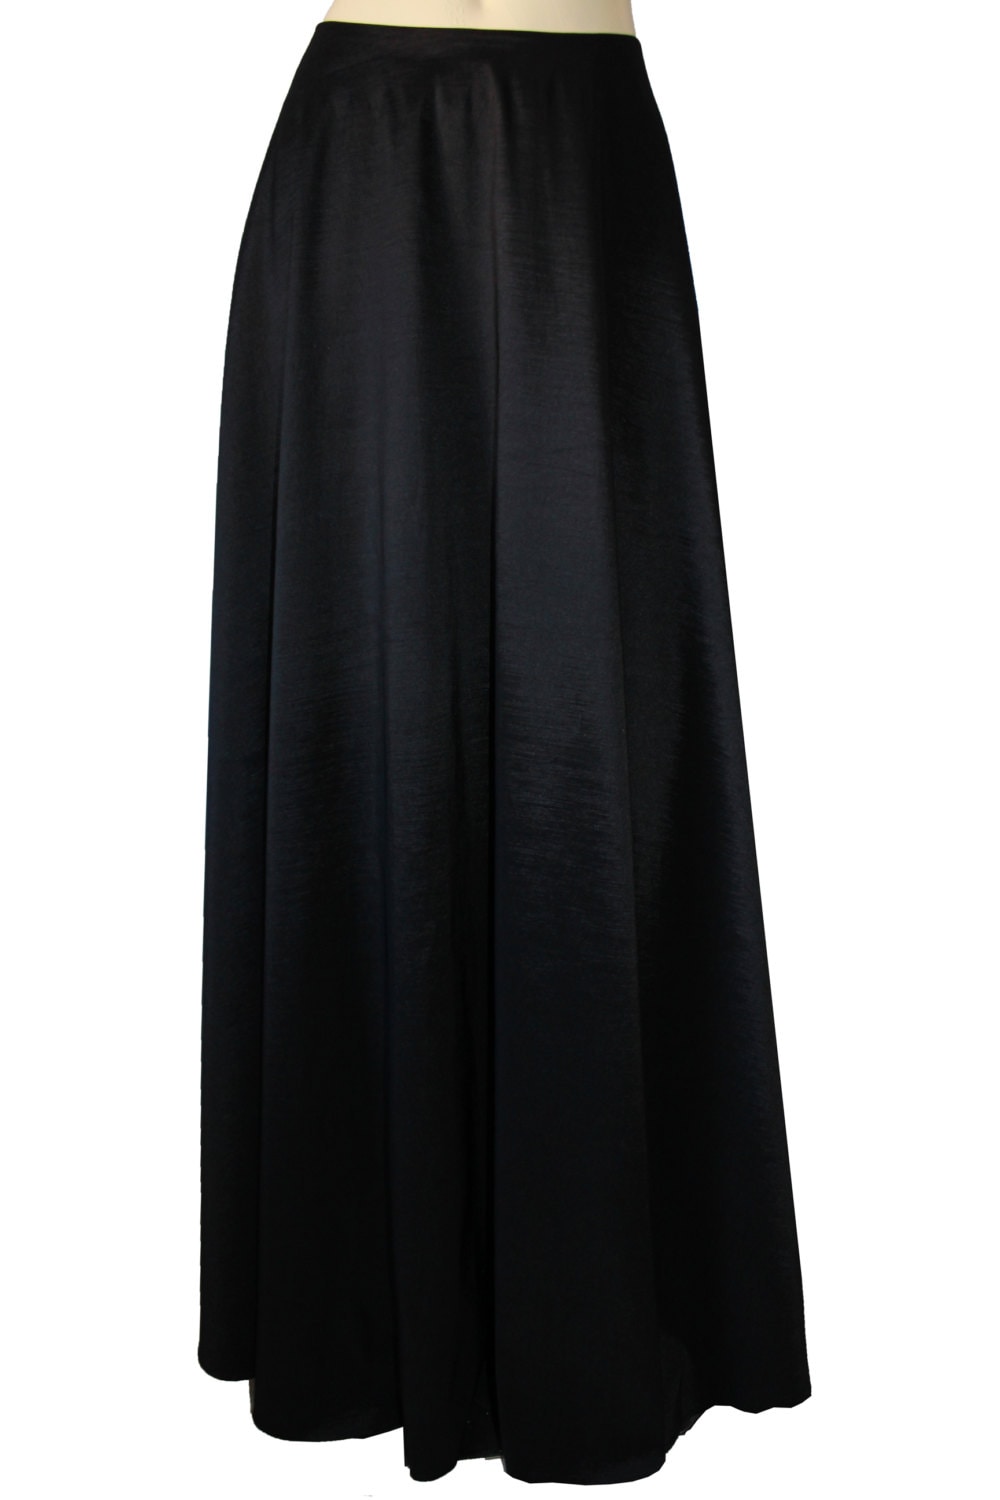 Long Black Skirt Plus Size 96